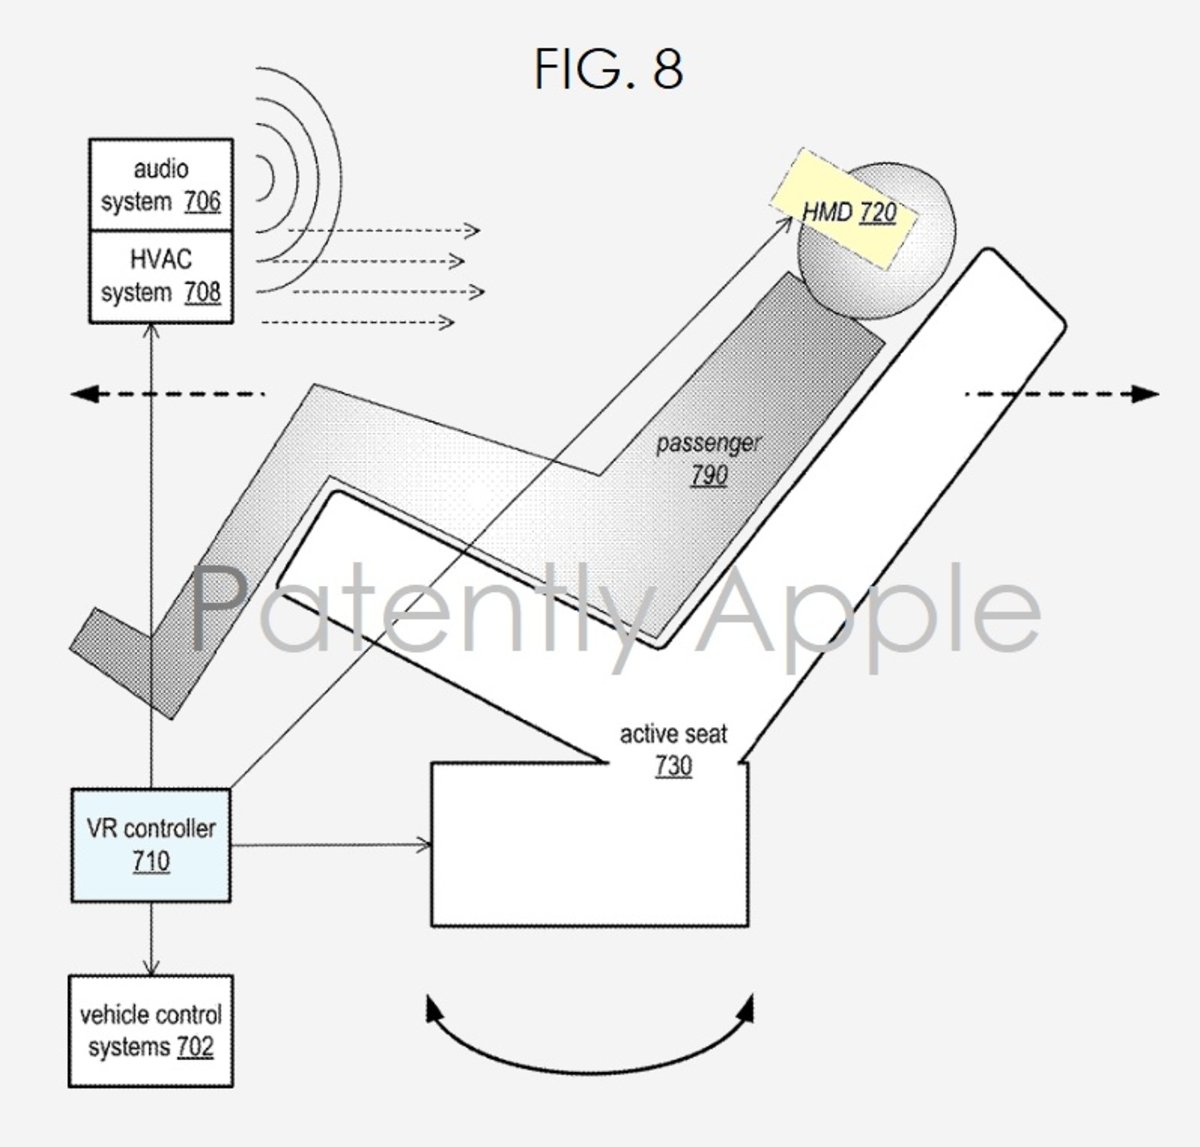 Pantalla inmersiva patente Apple